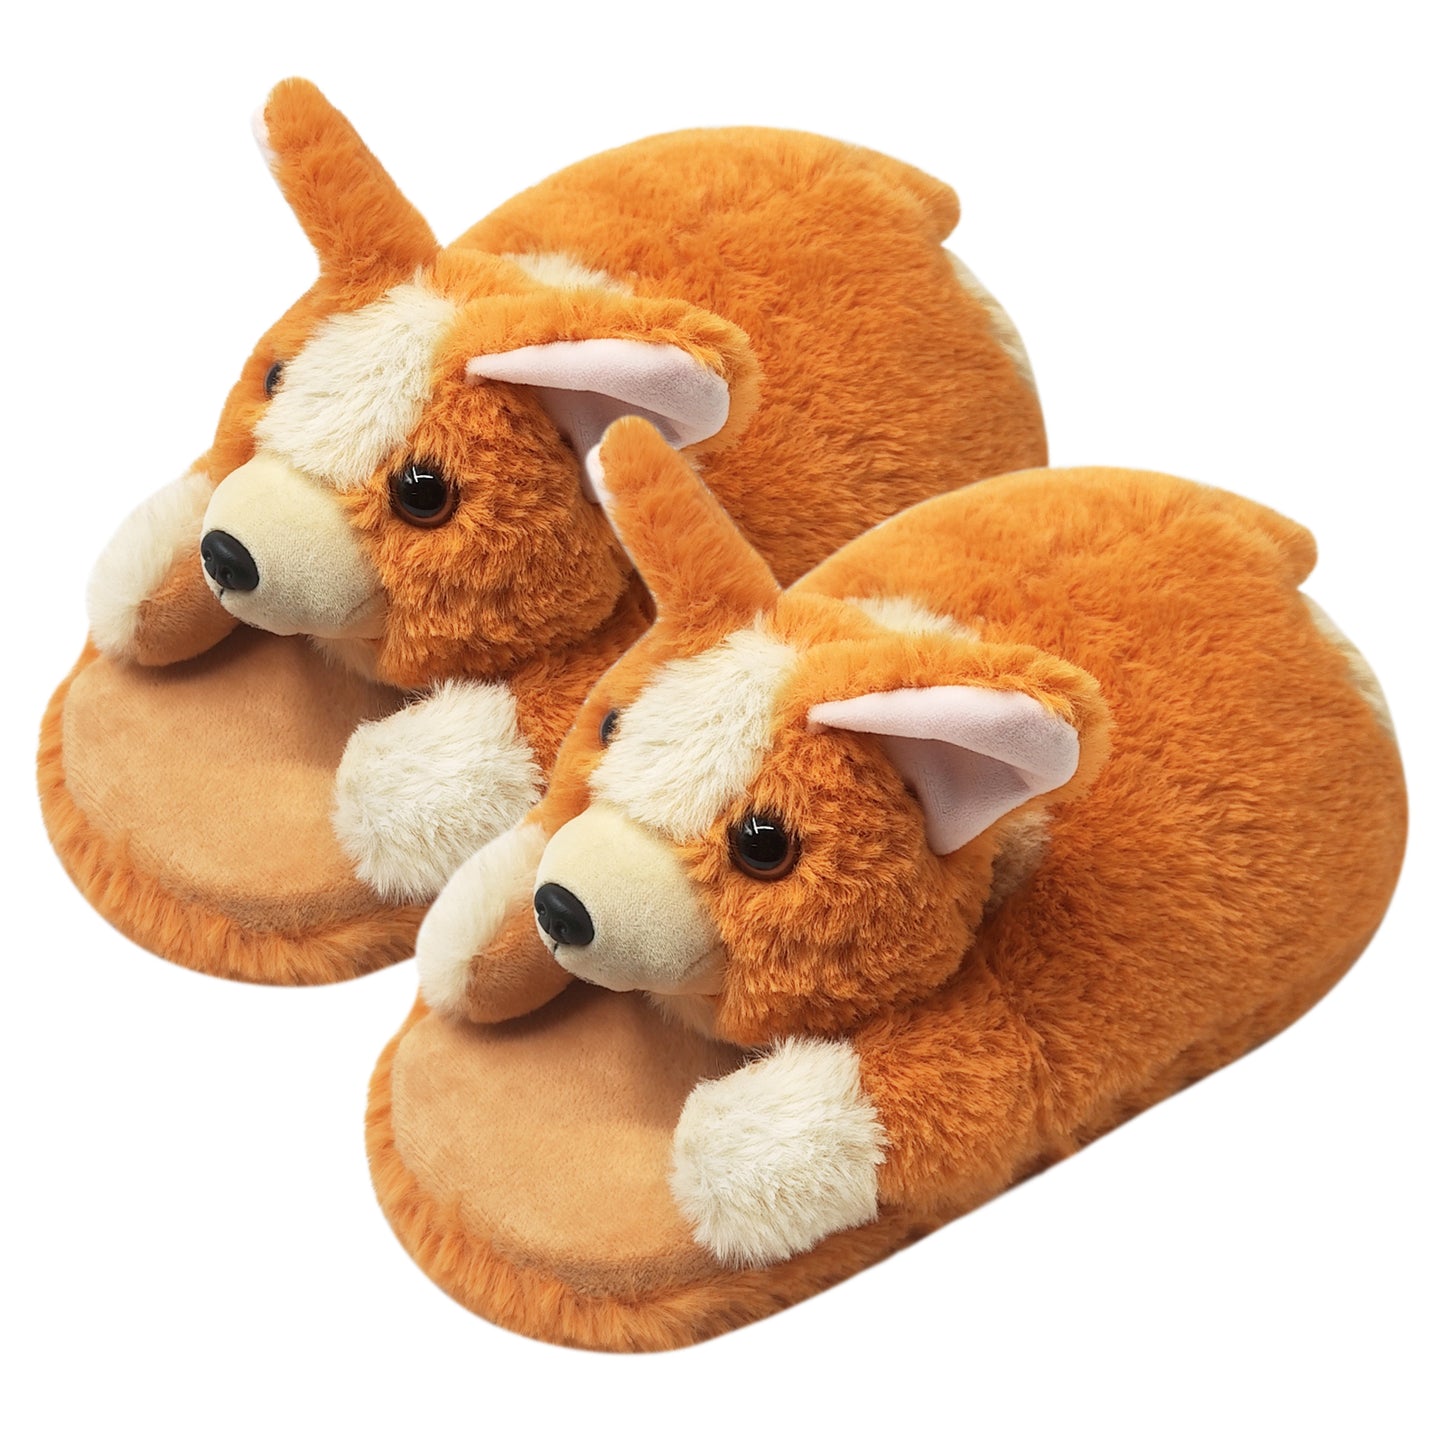 Corgi dog slippers